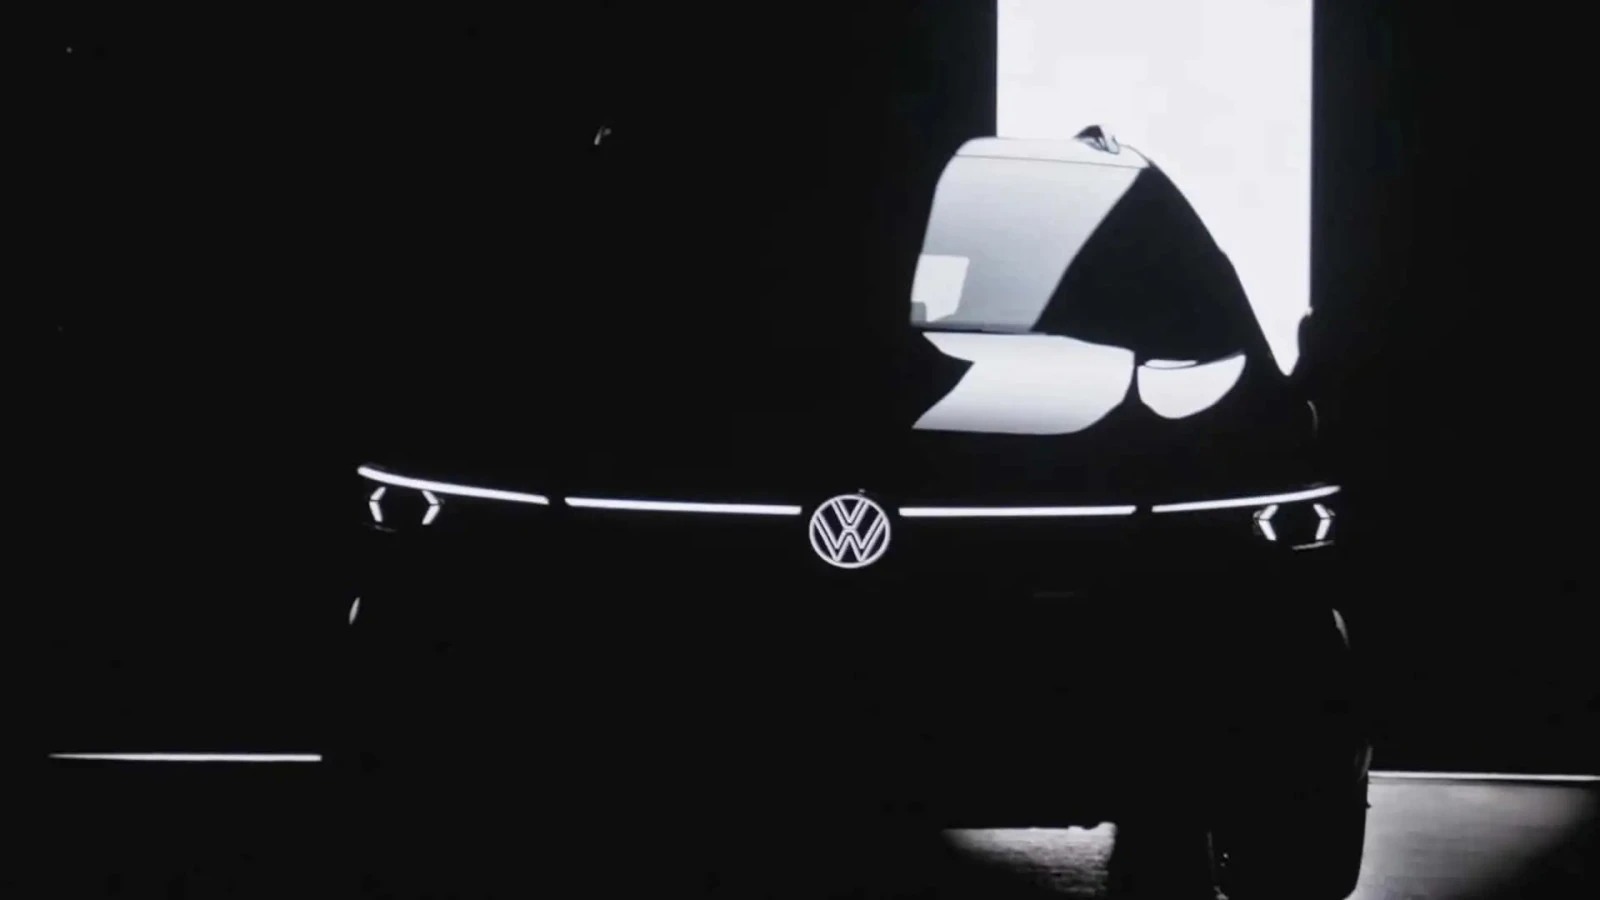 VW Golf Teaser